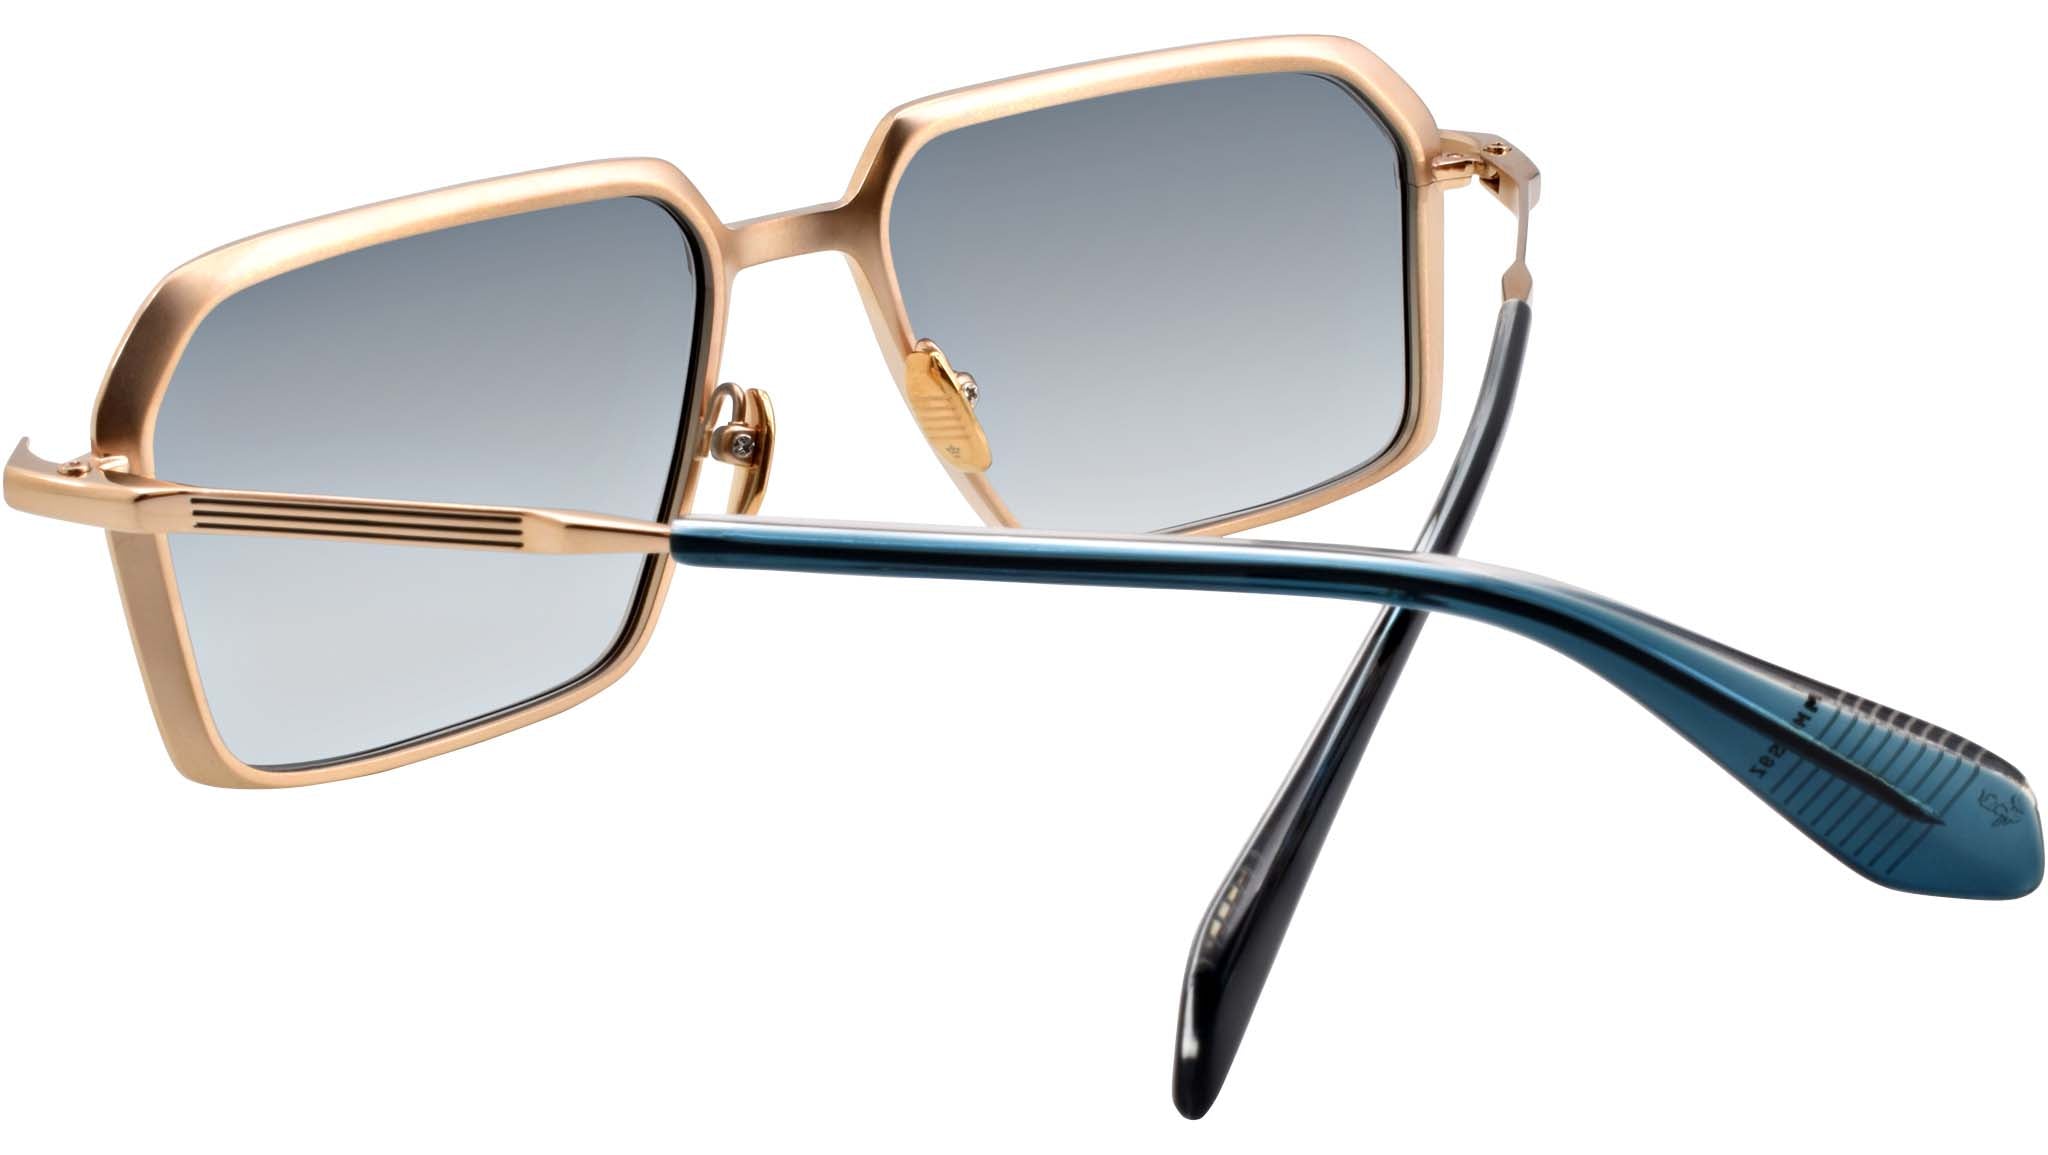 DITA MACH SIX Designer Dita Sunglasses Men For Men And Women High Quality,  Classic Retro Luxury Brand Eyewear With Box From Sunglasses_watch99, $66.95  | DHgate.Com